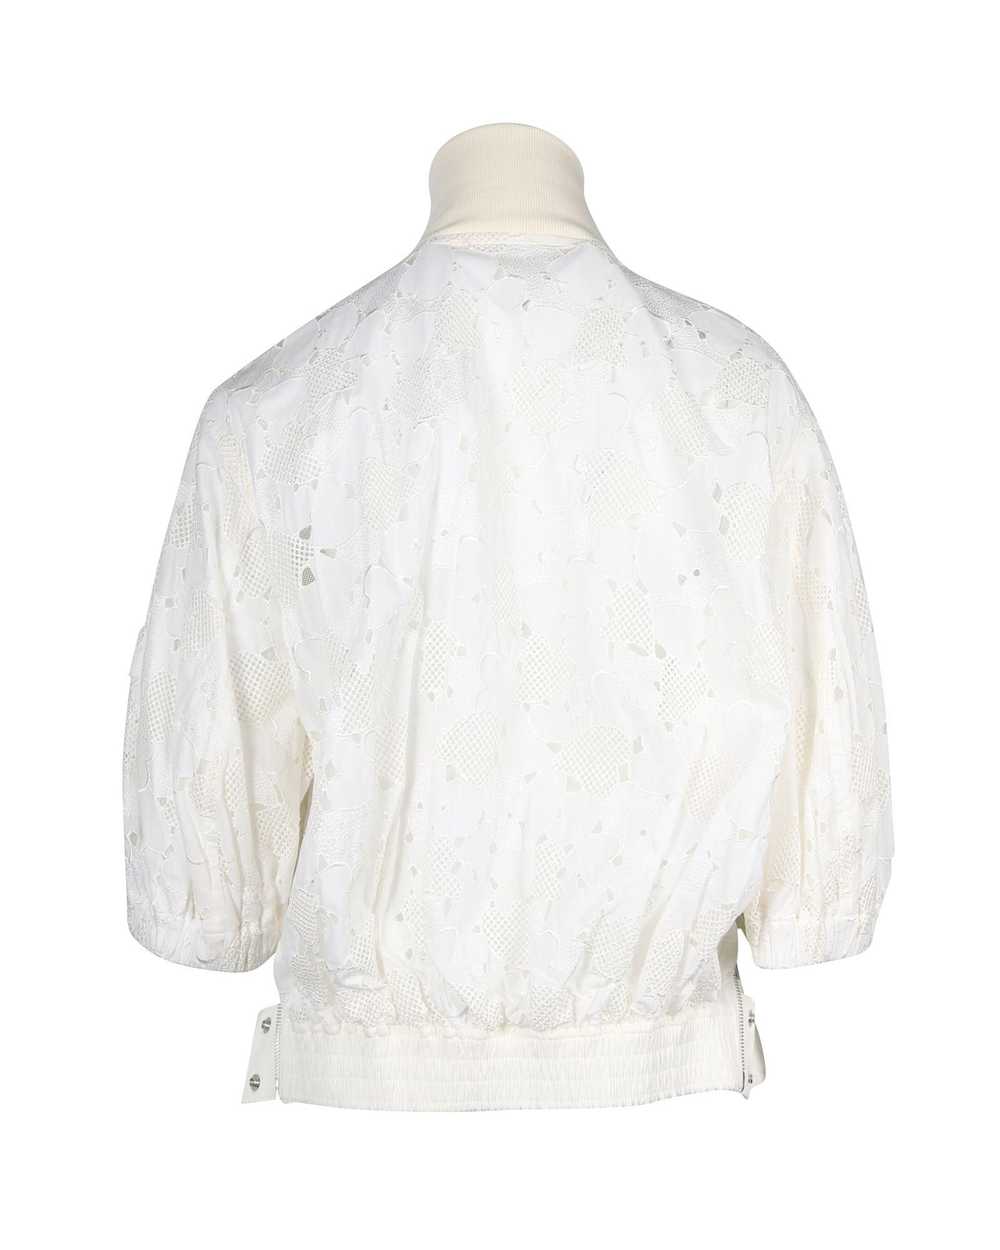 Sacai White Cotton Lace Bomber Jacket by Sacai - image 3